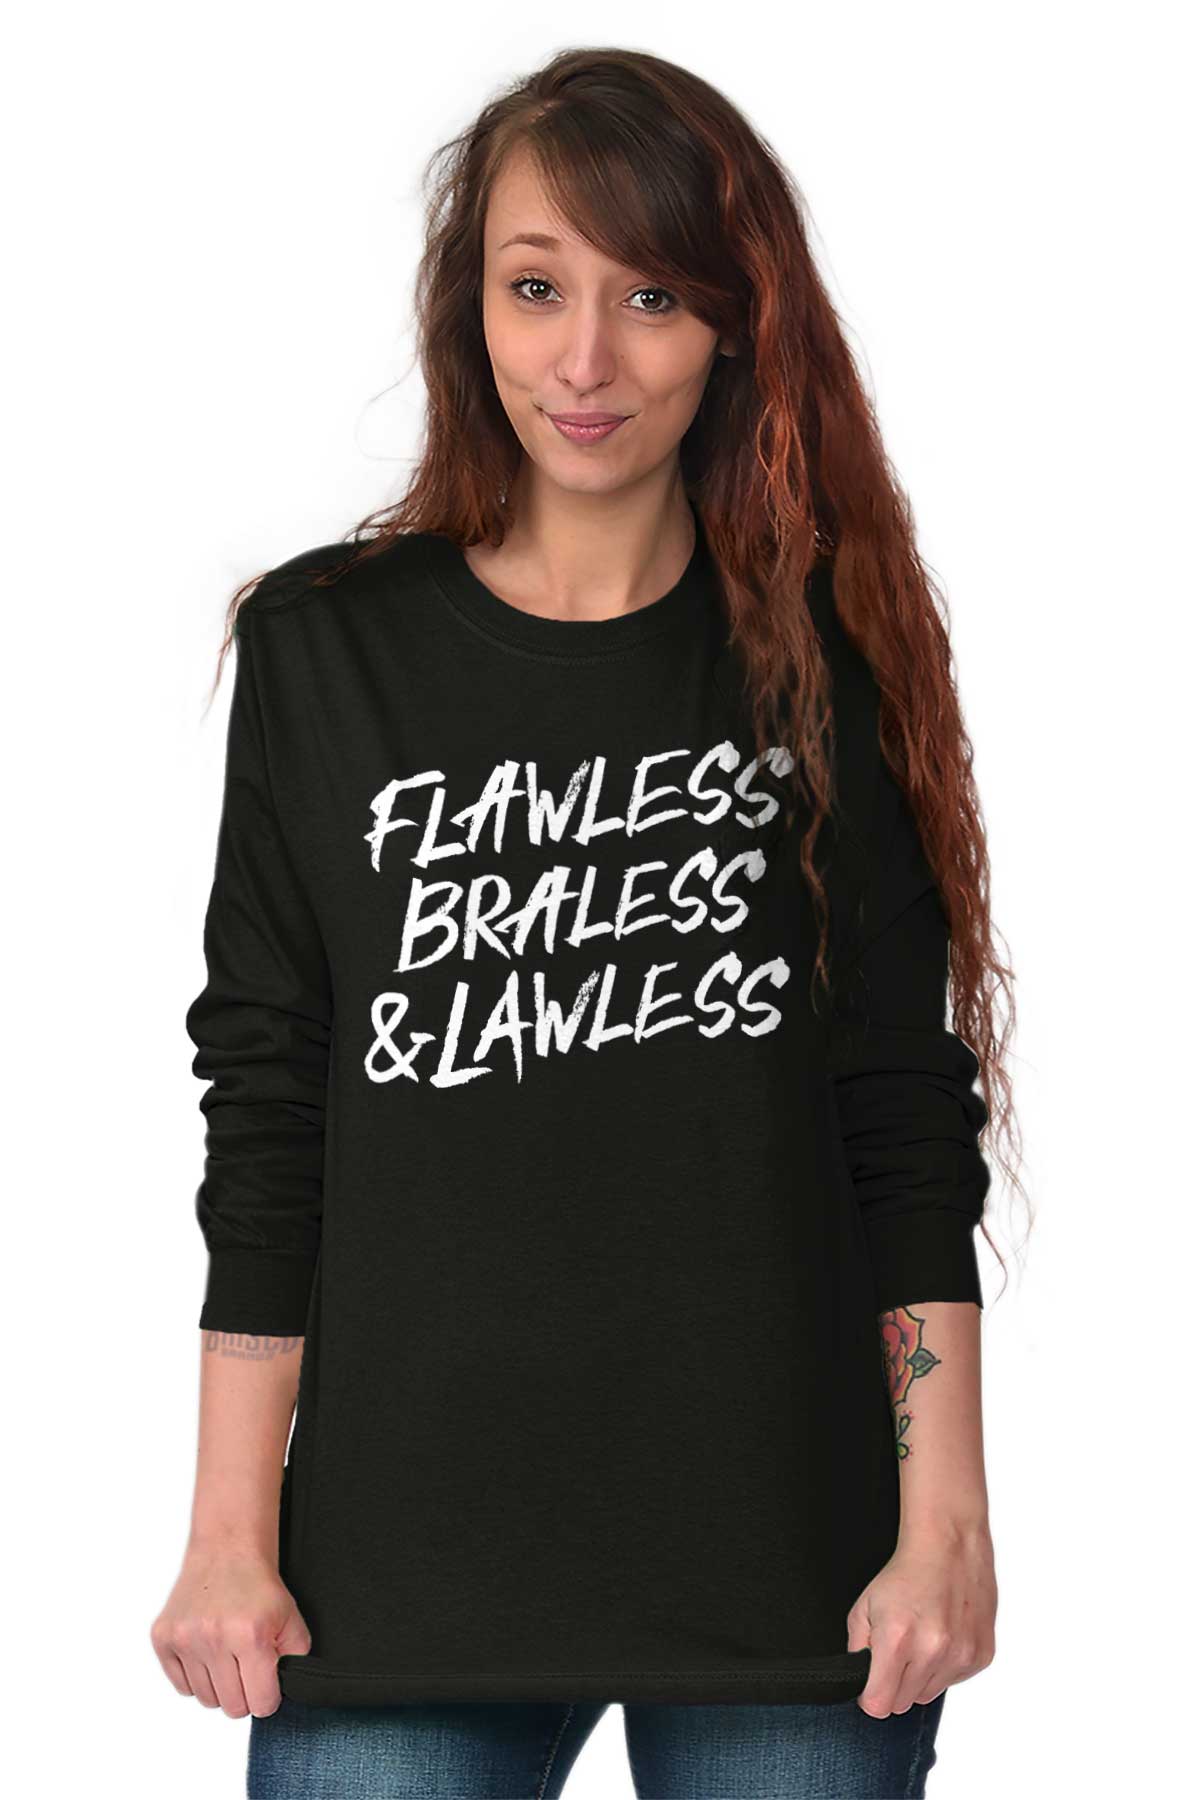 braless flawless